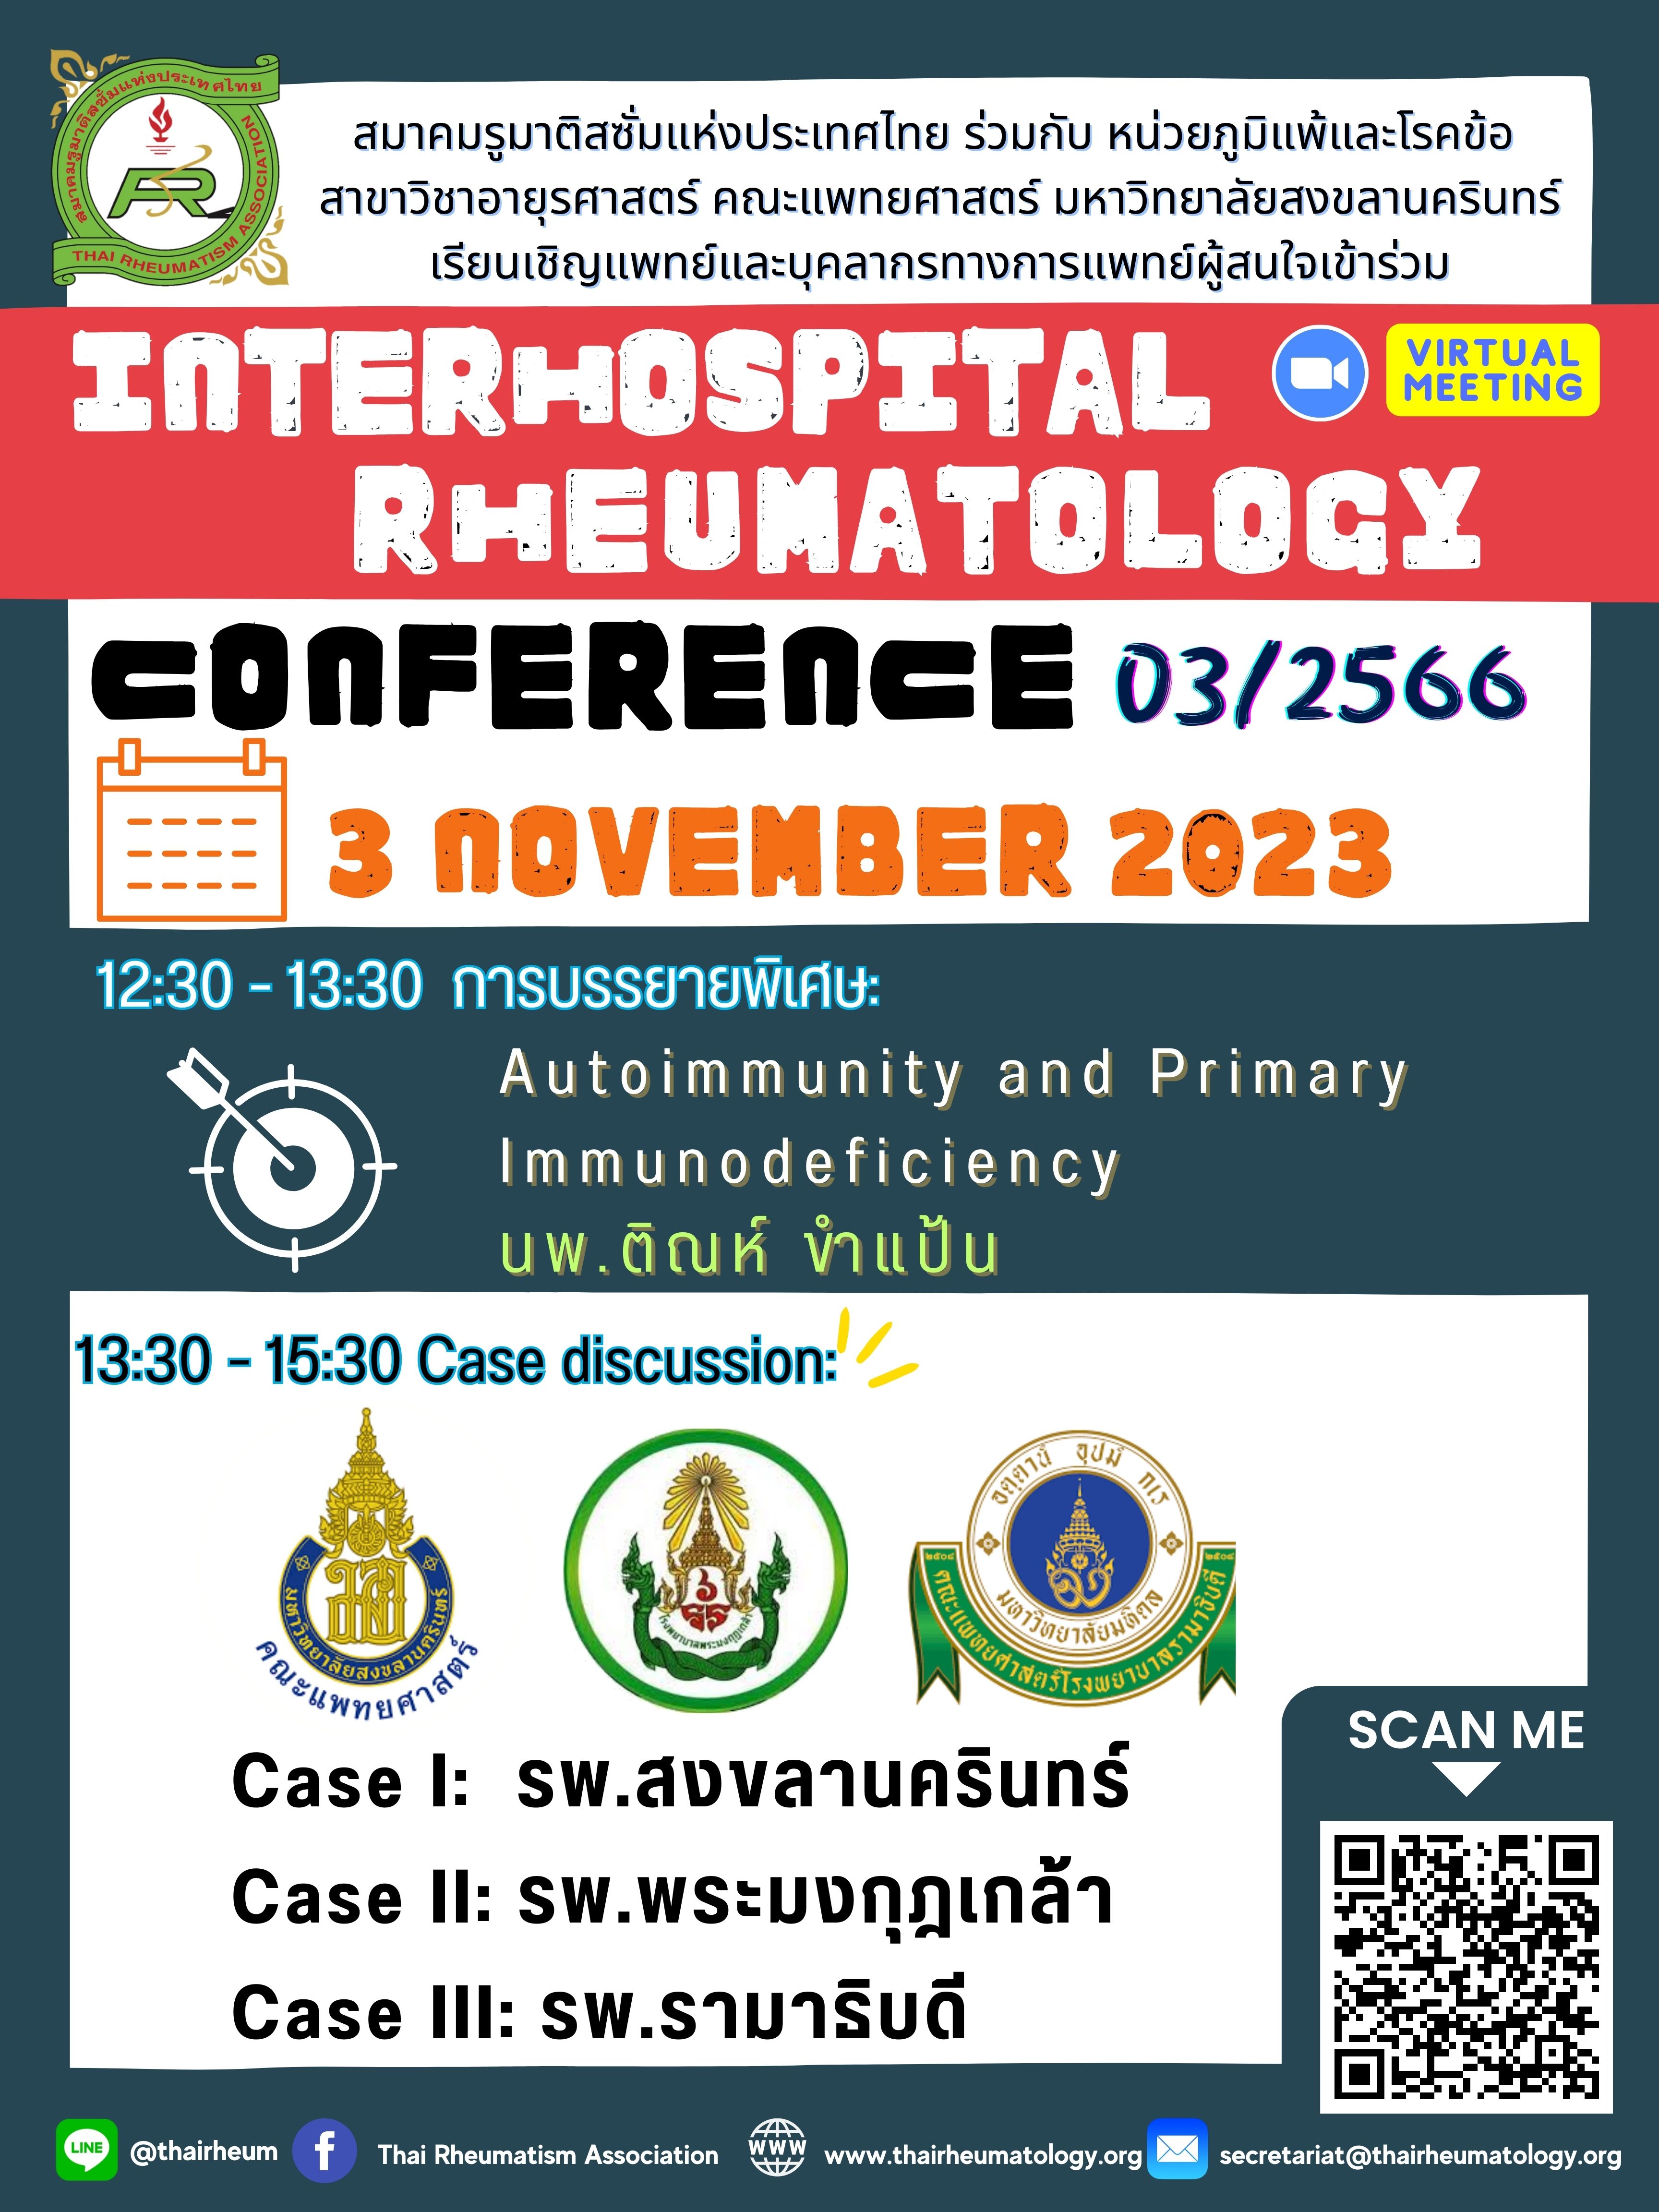 VDO rerun - Interhospital conference 3/2566